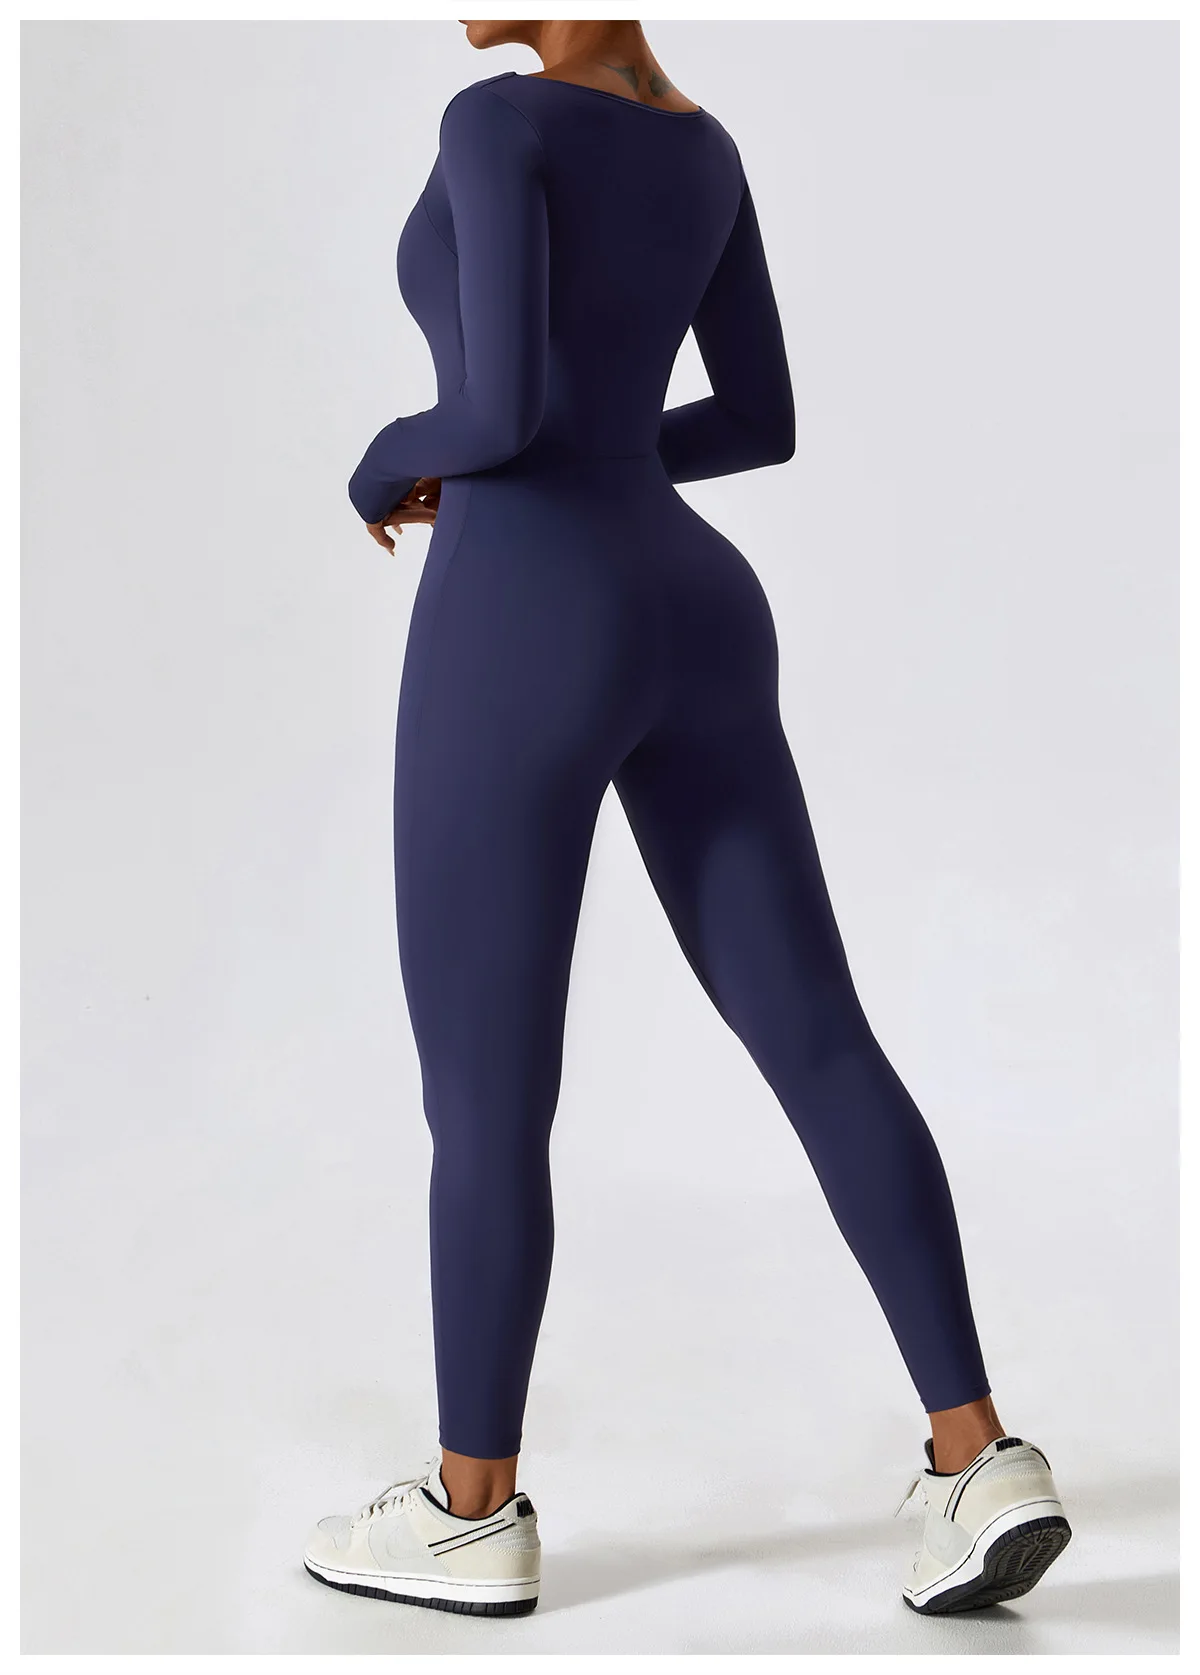 Hingto Designer Custom Nylon Women Fitness Compression Jumpsuit Mujer ...